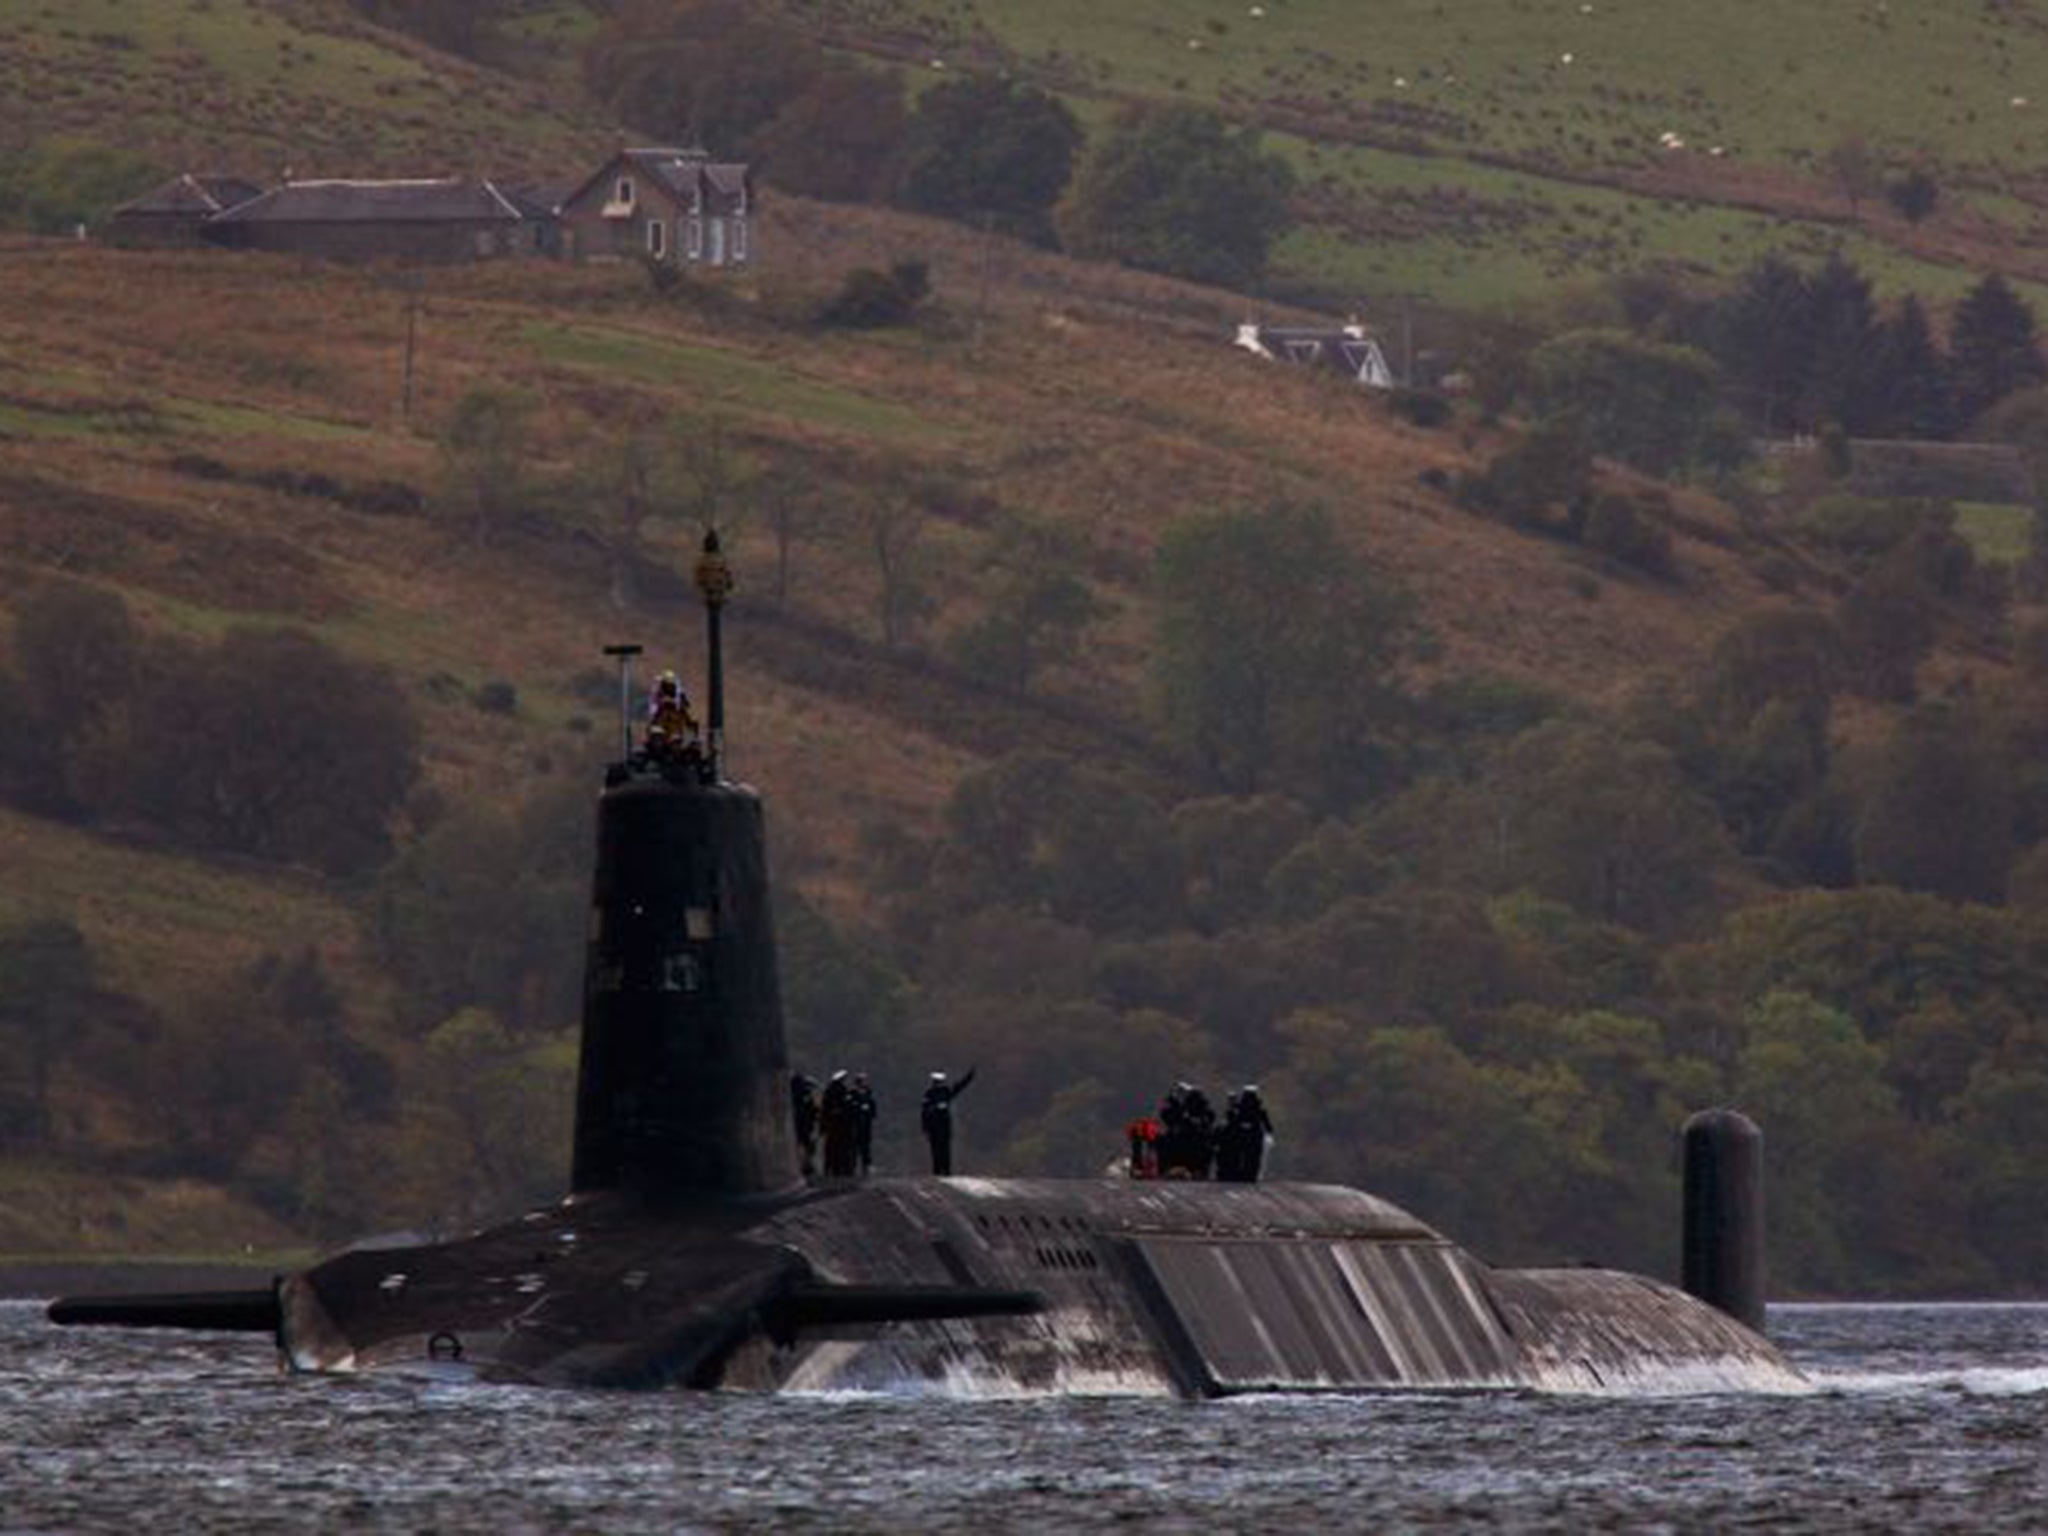 A Trident nuclear submarine